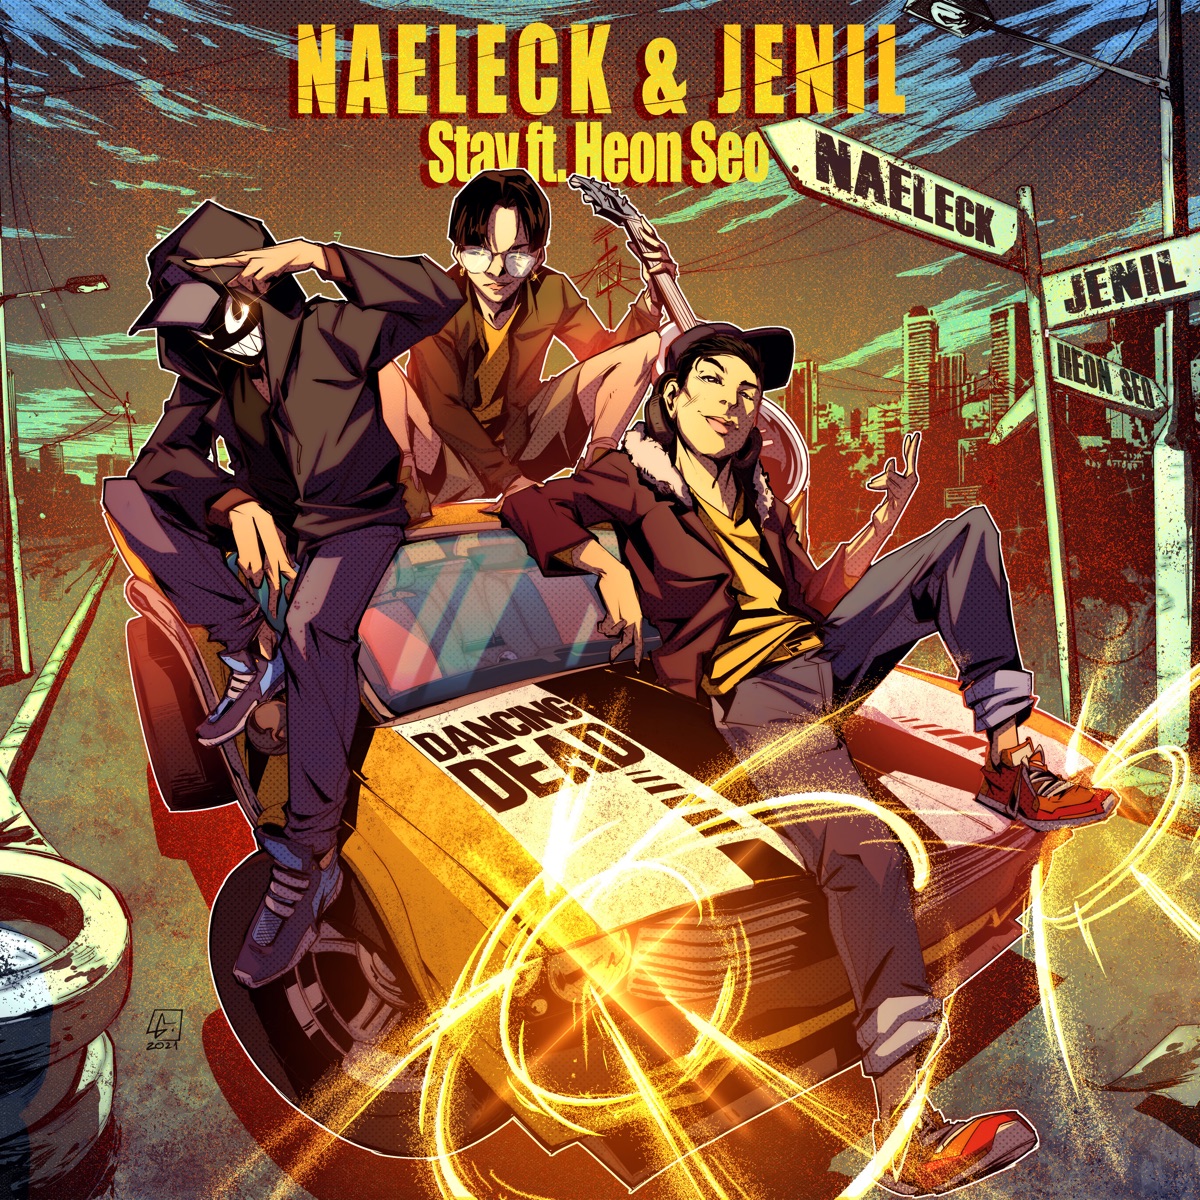 Anime Openings de Naeleck — Apple Music